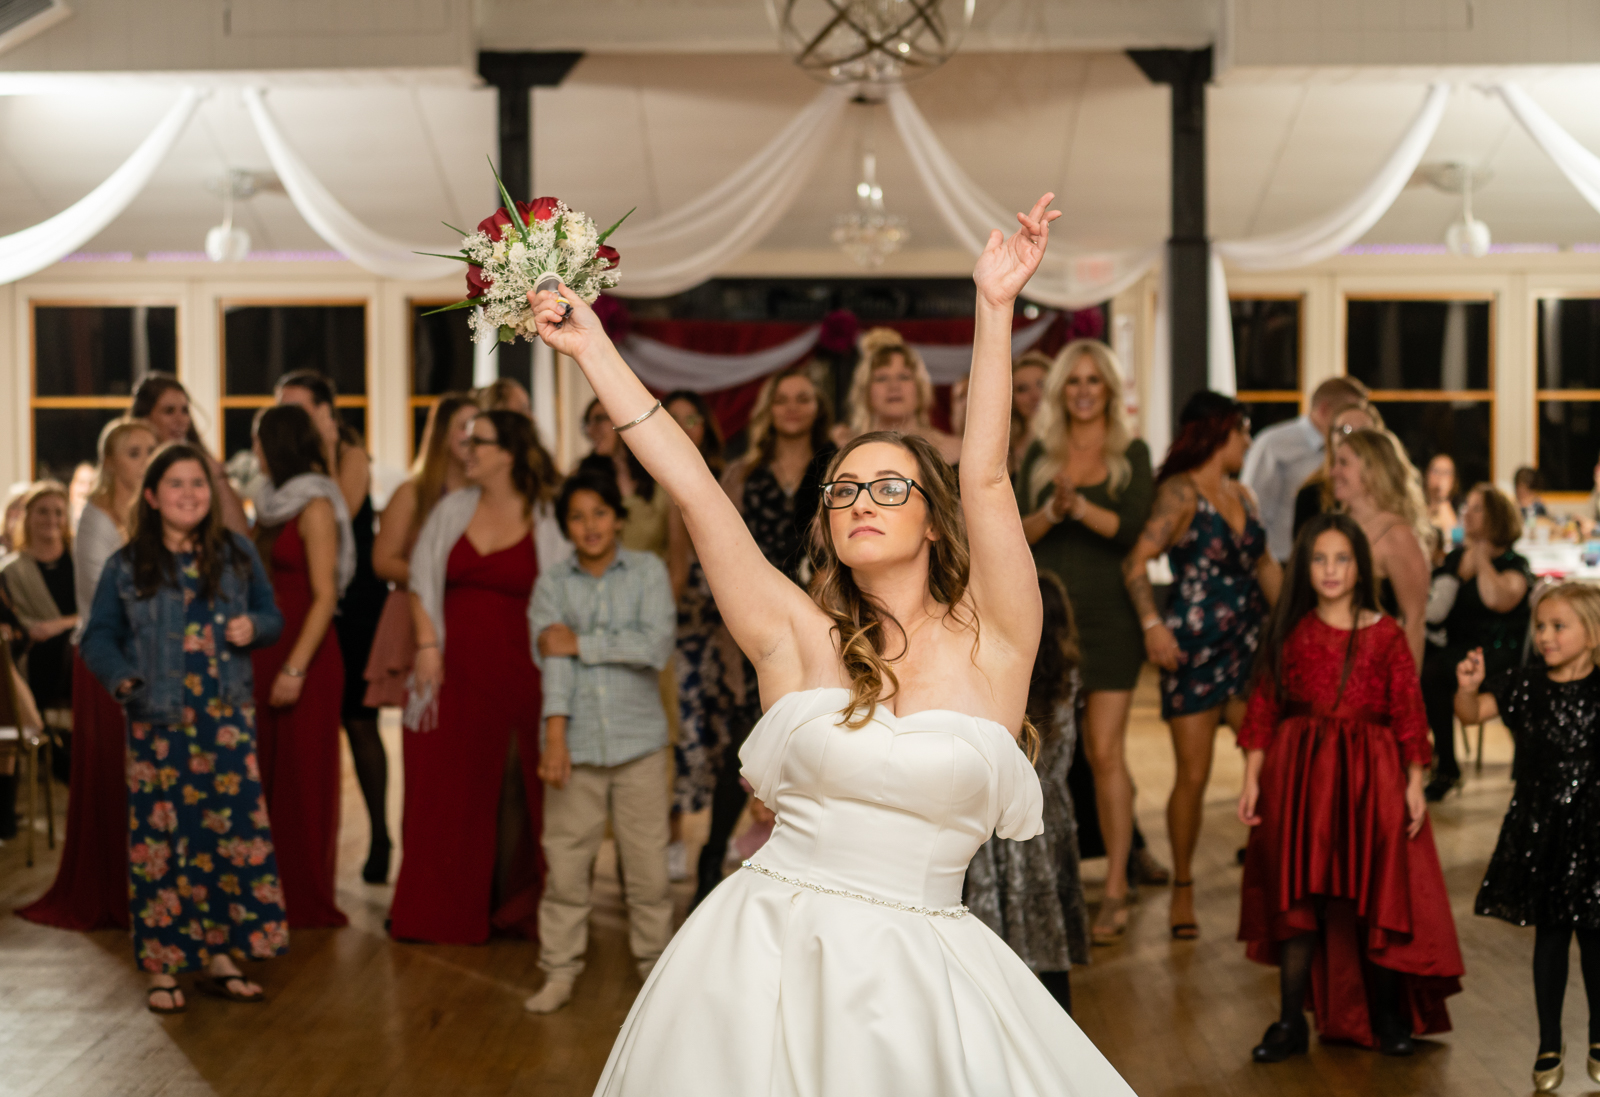 Bride, bouquet toss, wedding reception at German Central Organization